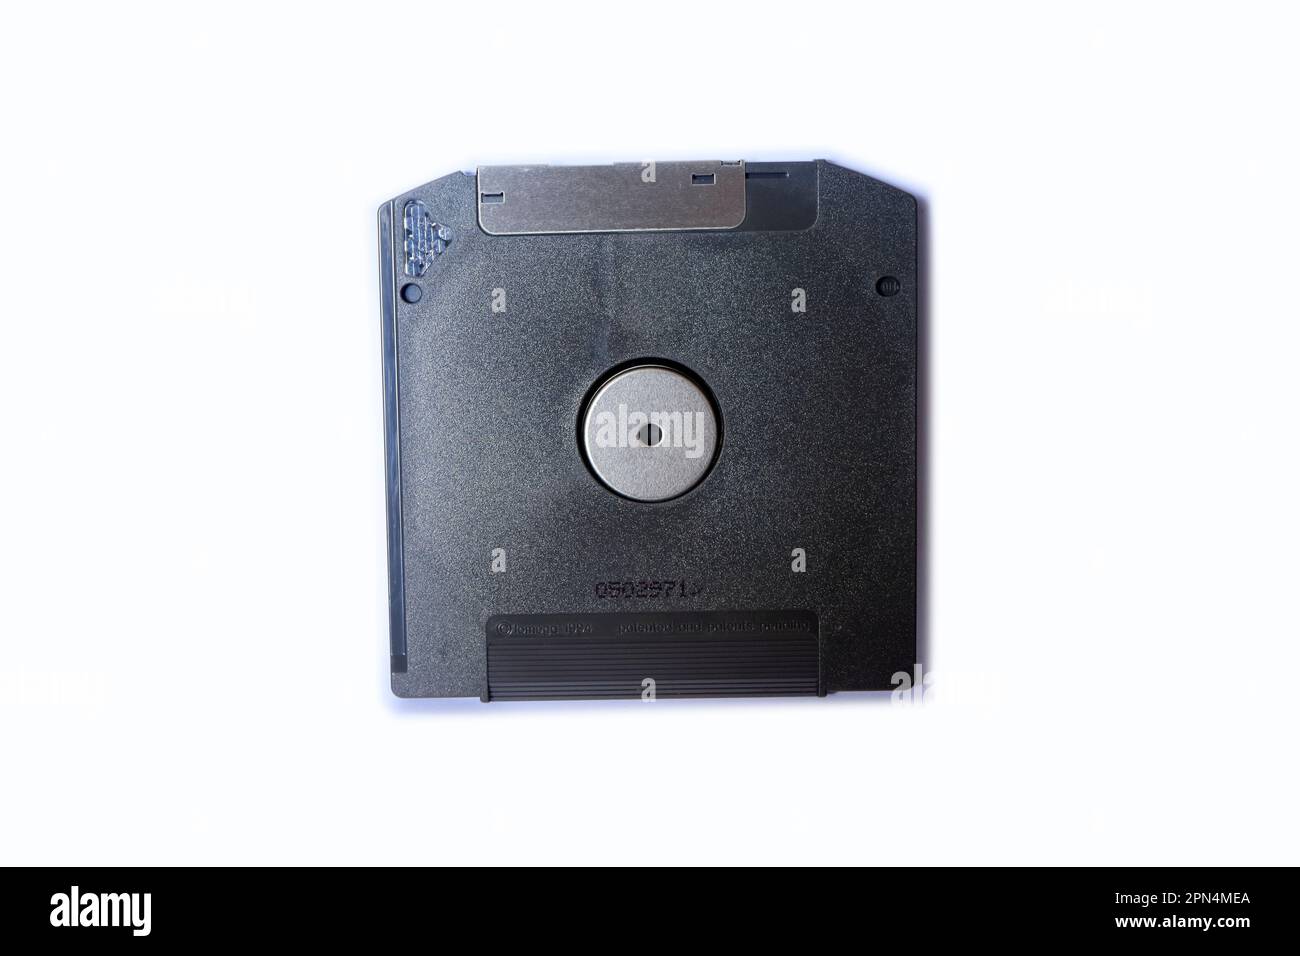 Iomega zip drive storage disk. accessories Stock Photo